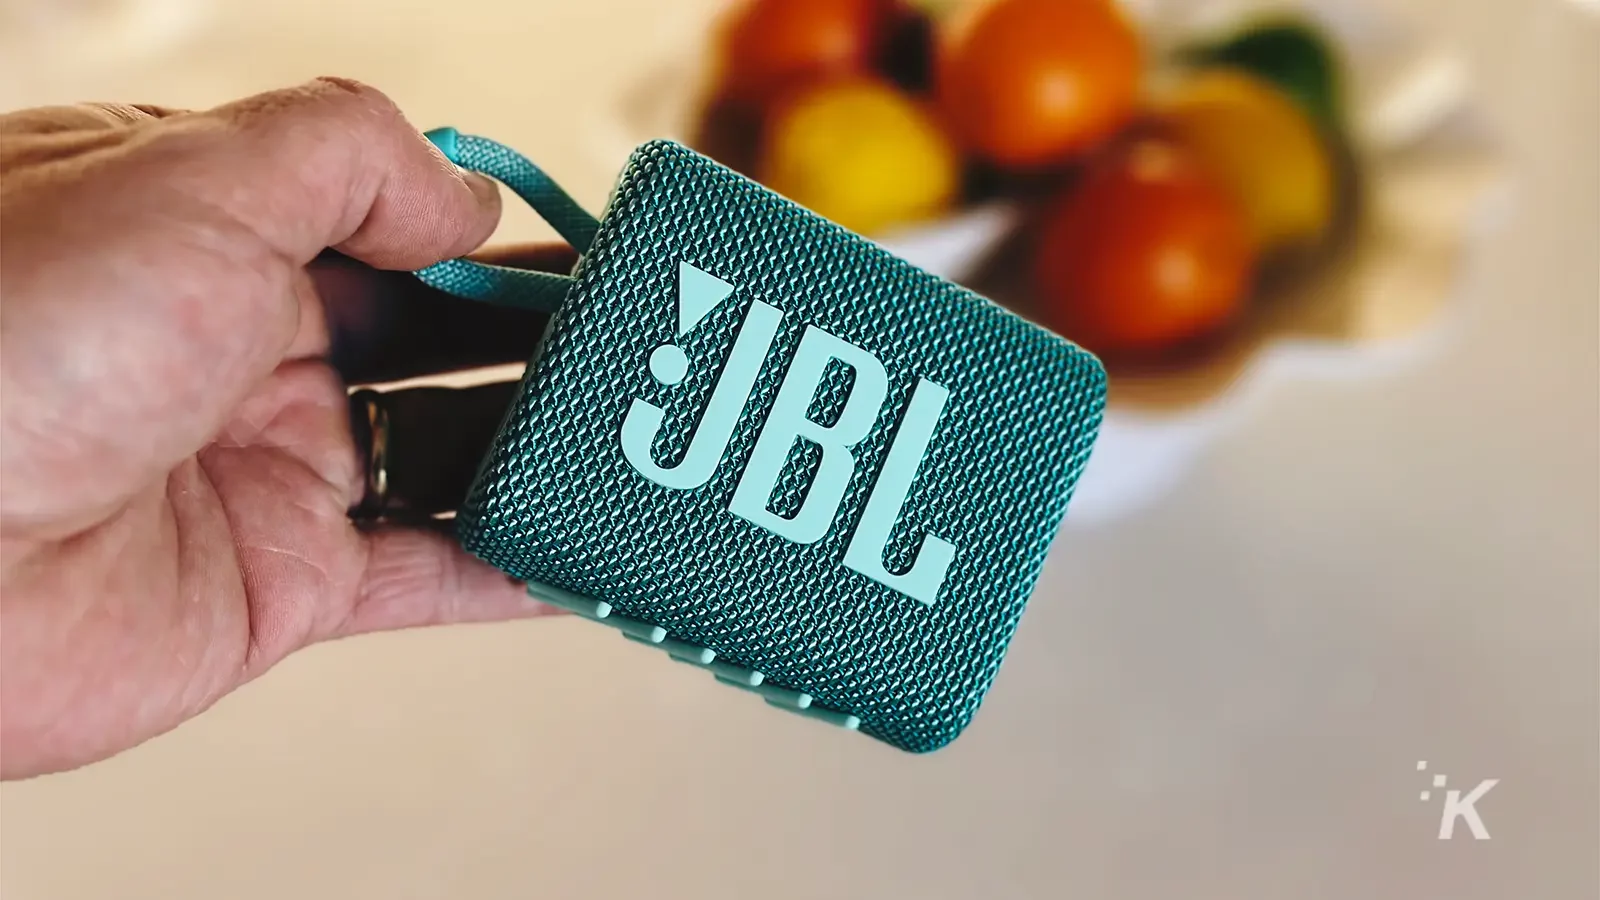 Altoparlante portatile JBL Go 3 verde acqua in mano